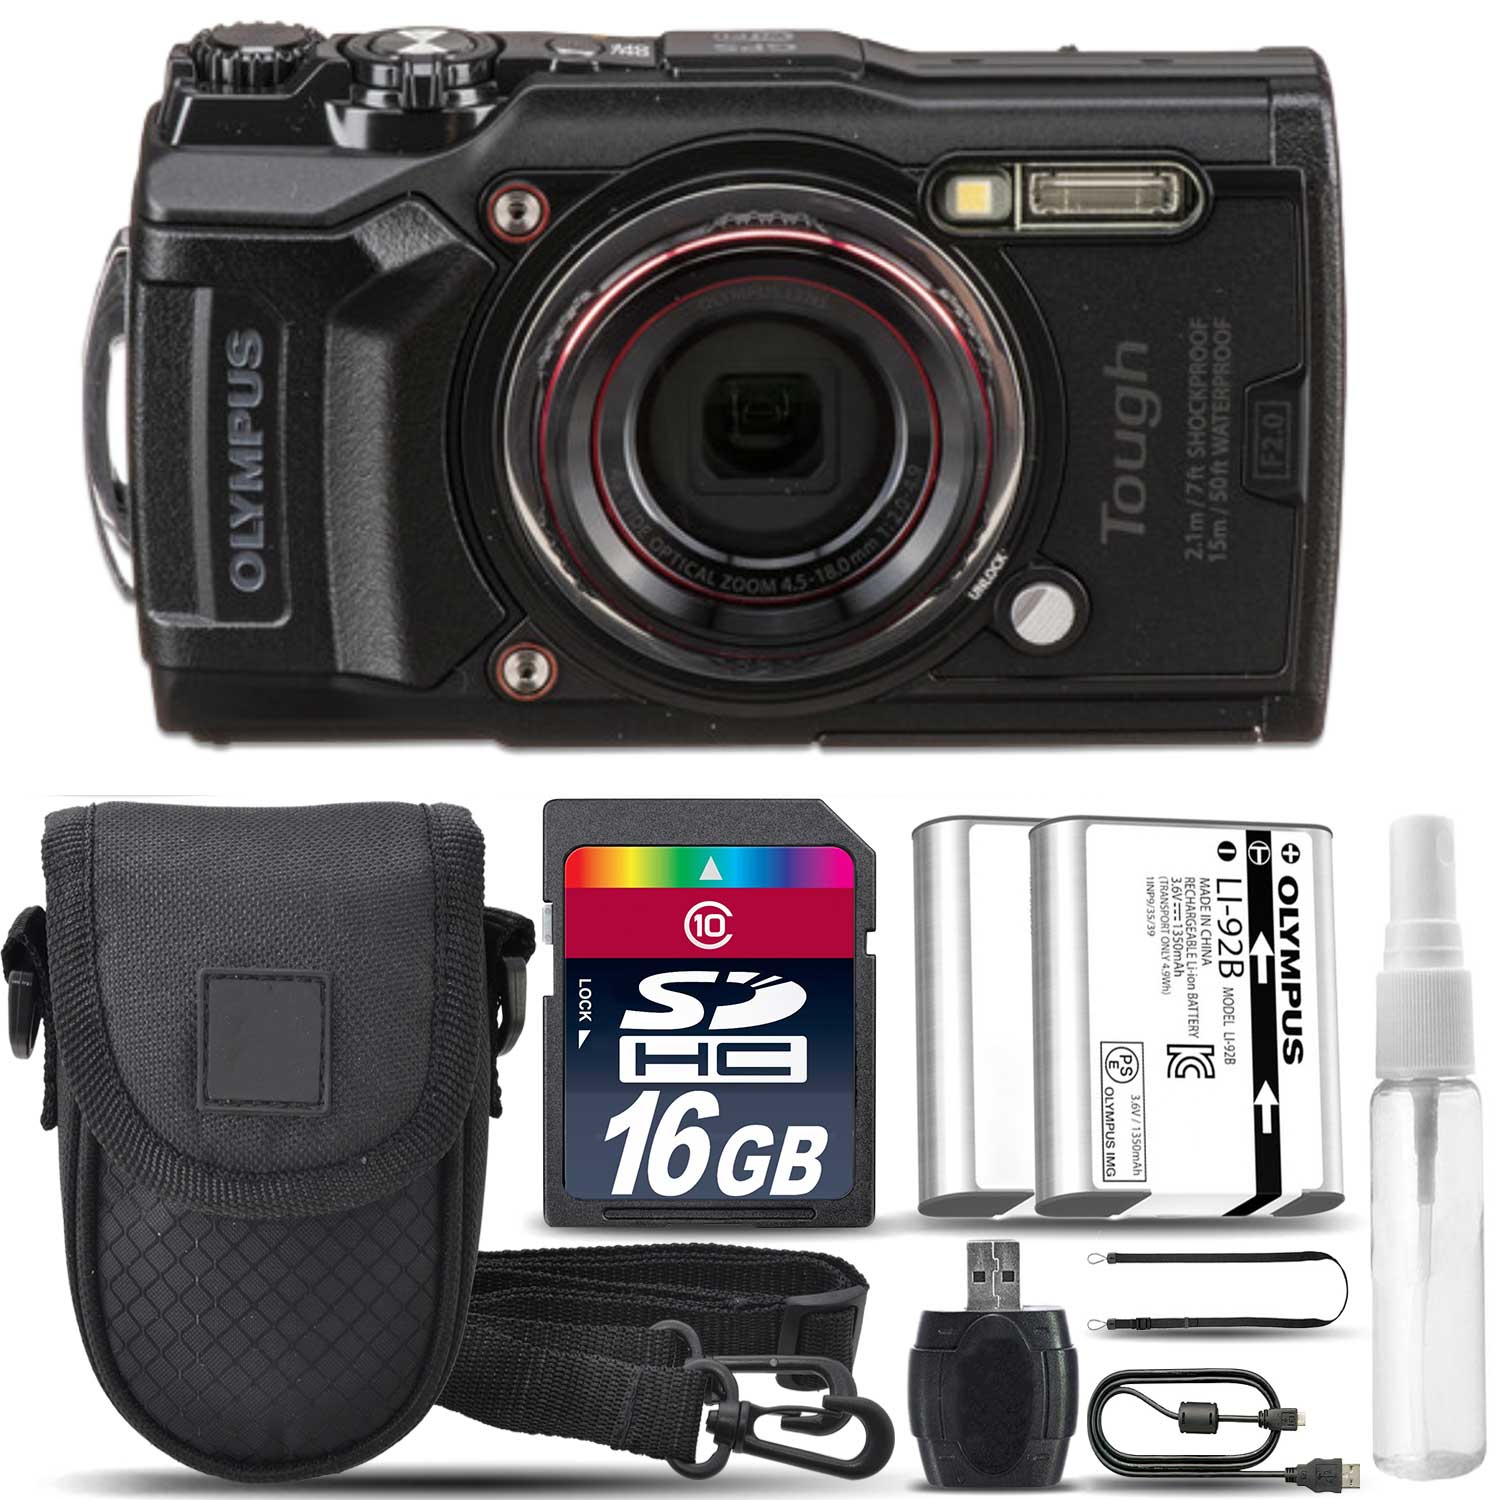 Stylus TOUGH TG-6 Digital Waterproof Camera Black + Case +EXT BATT + 16GB *FREE SHIPPING*